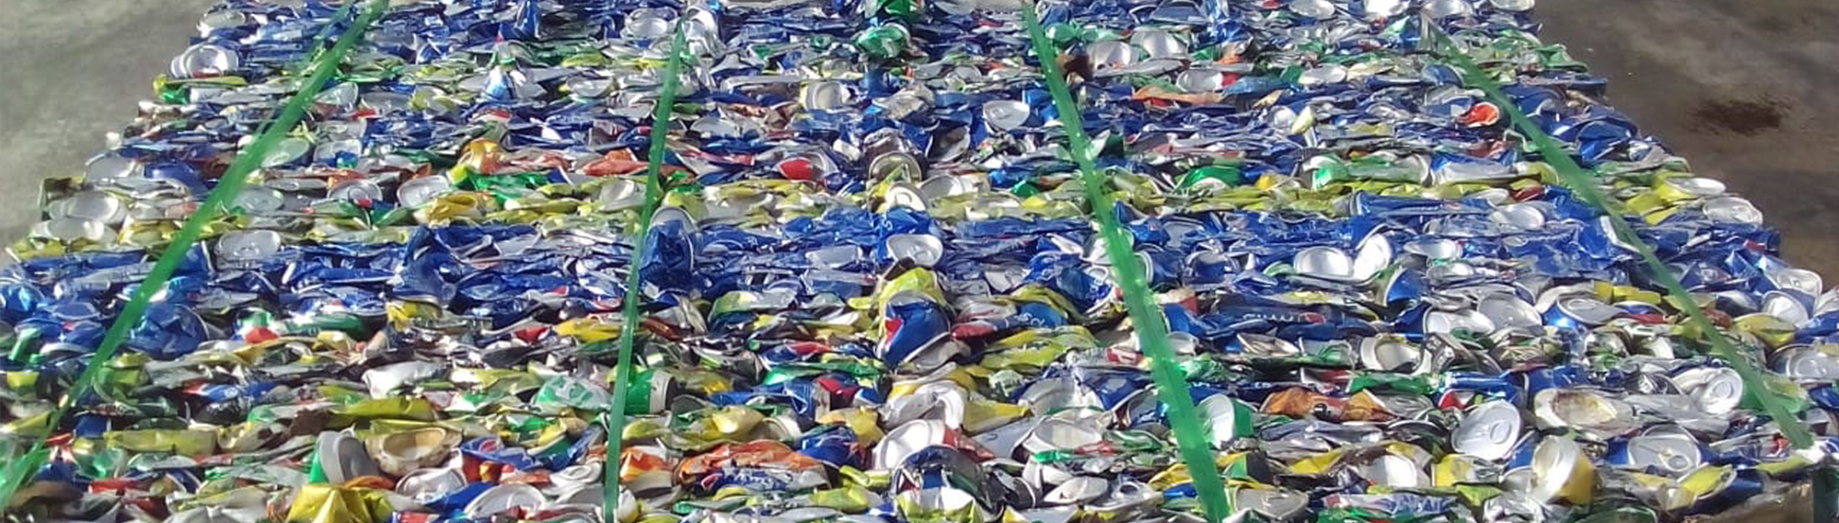 Waste Management Services to Pepsi's Mega Plant in Jeddah